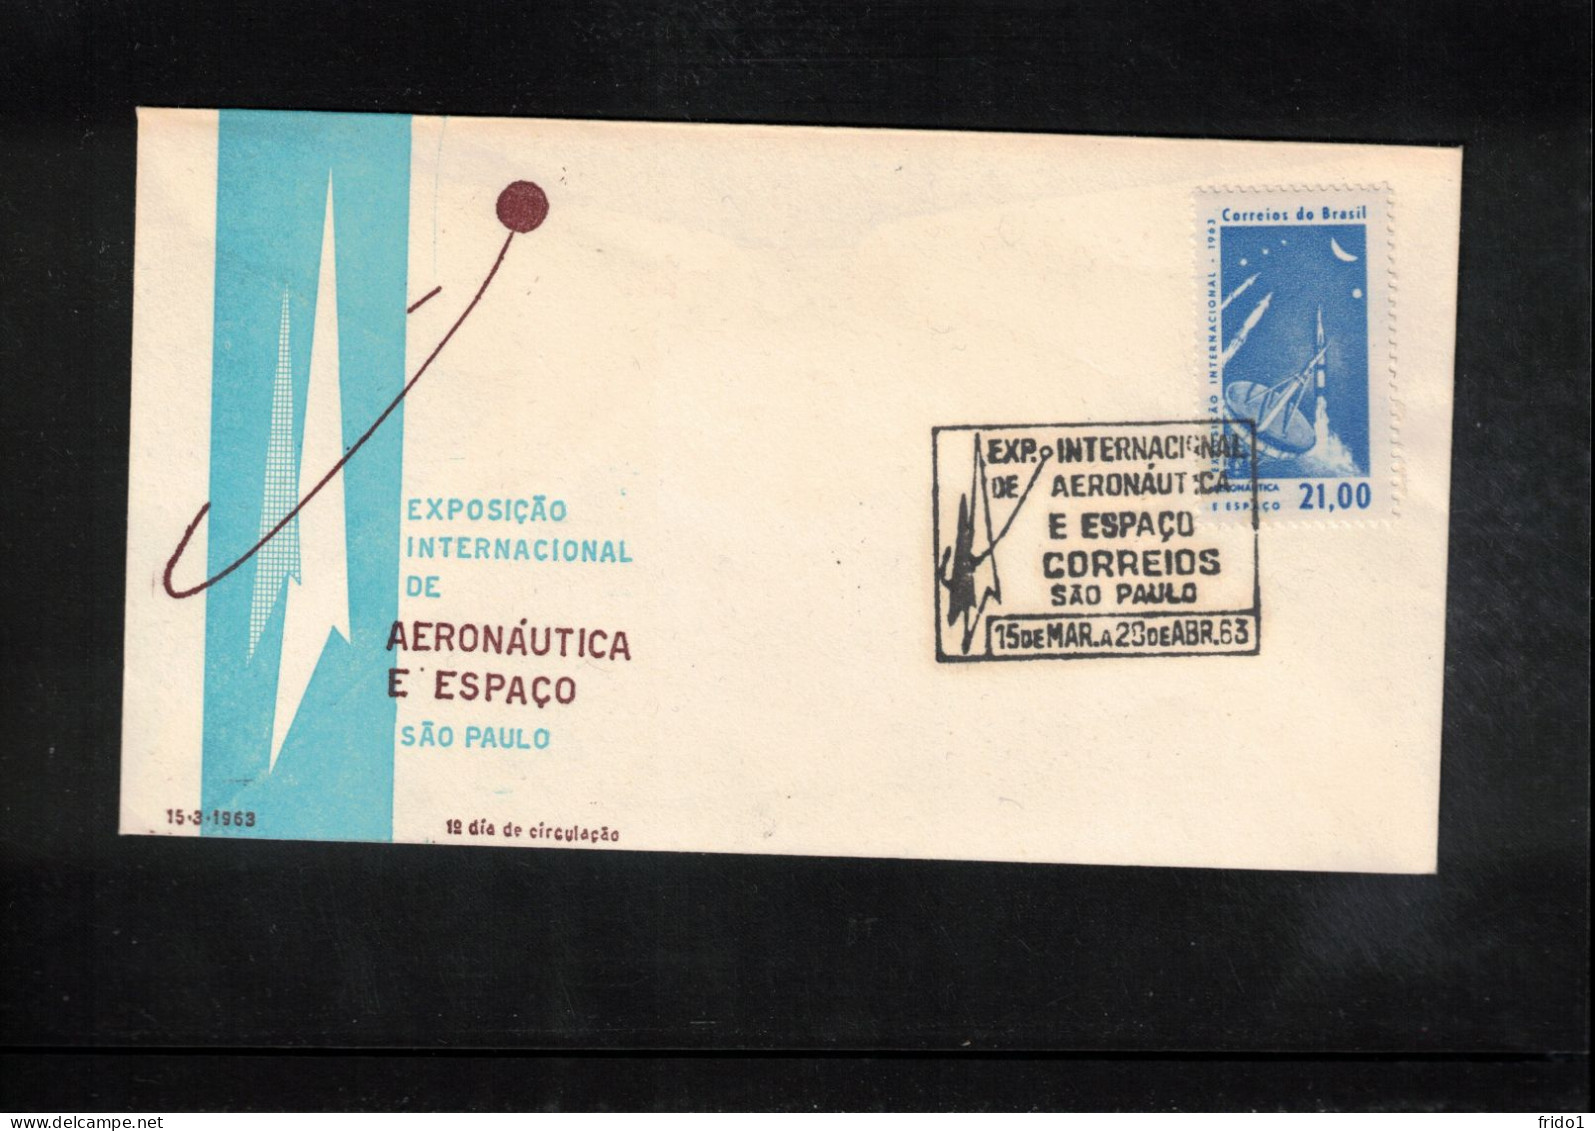 Brasil 1963 Space / Weltraum International Aeronautical Exhibition + Space Interesting Cover FDC - América Del Sur